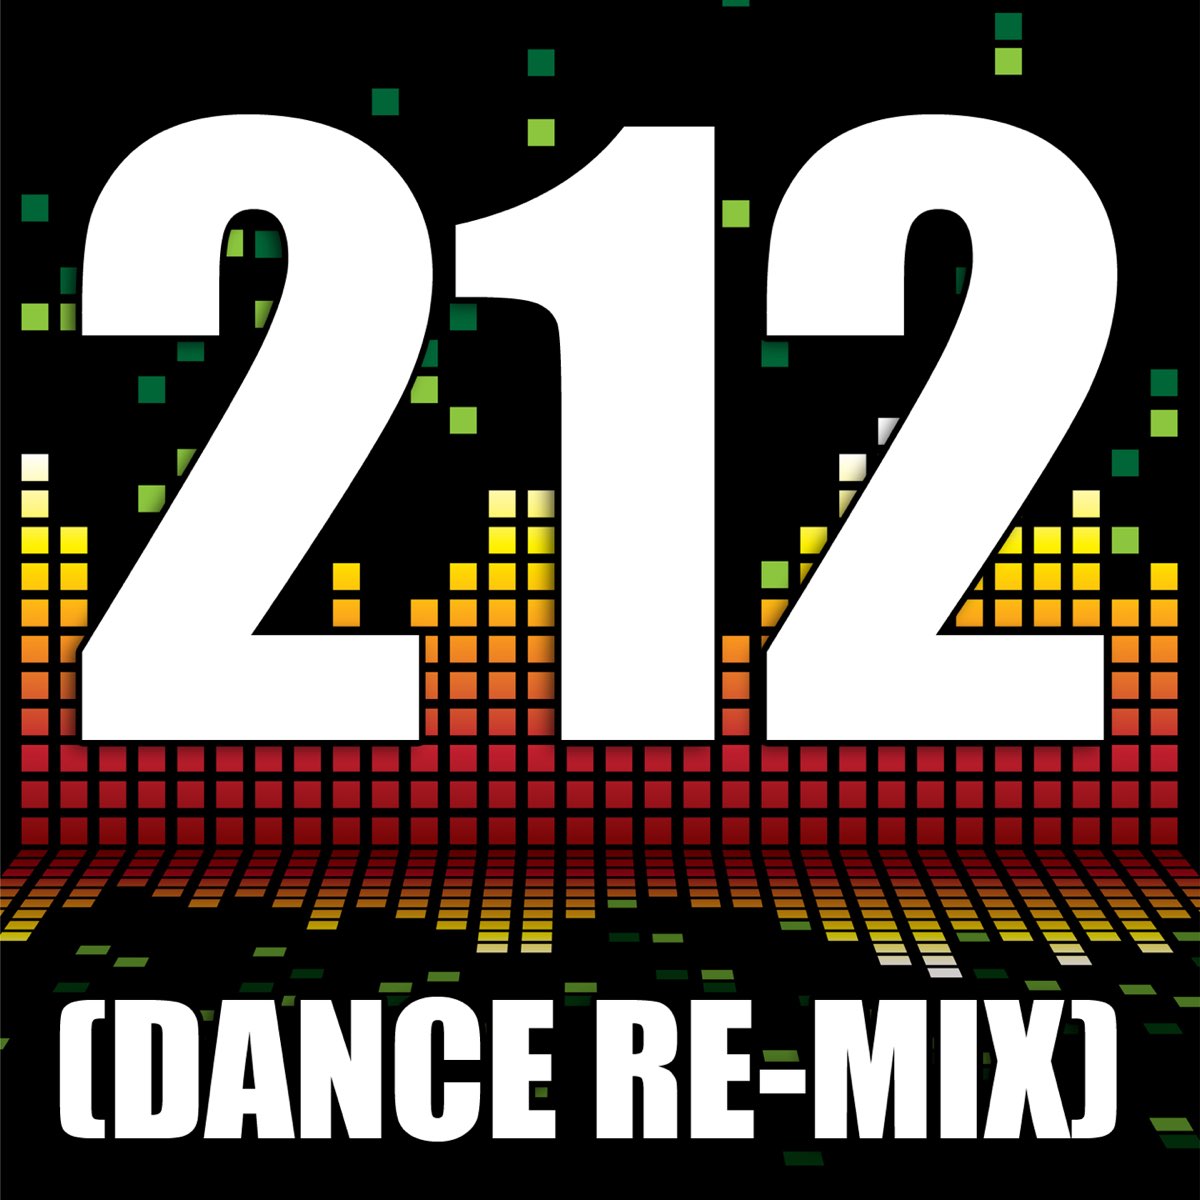 Dance remix 2. 212 Heroes. Mix Hero. Music News Vol.212.